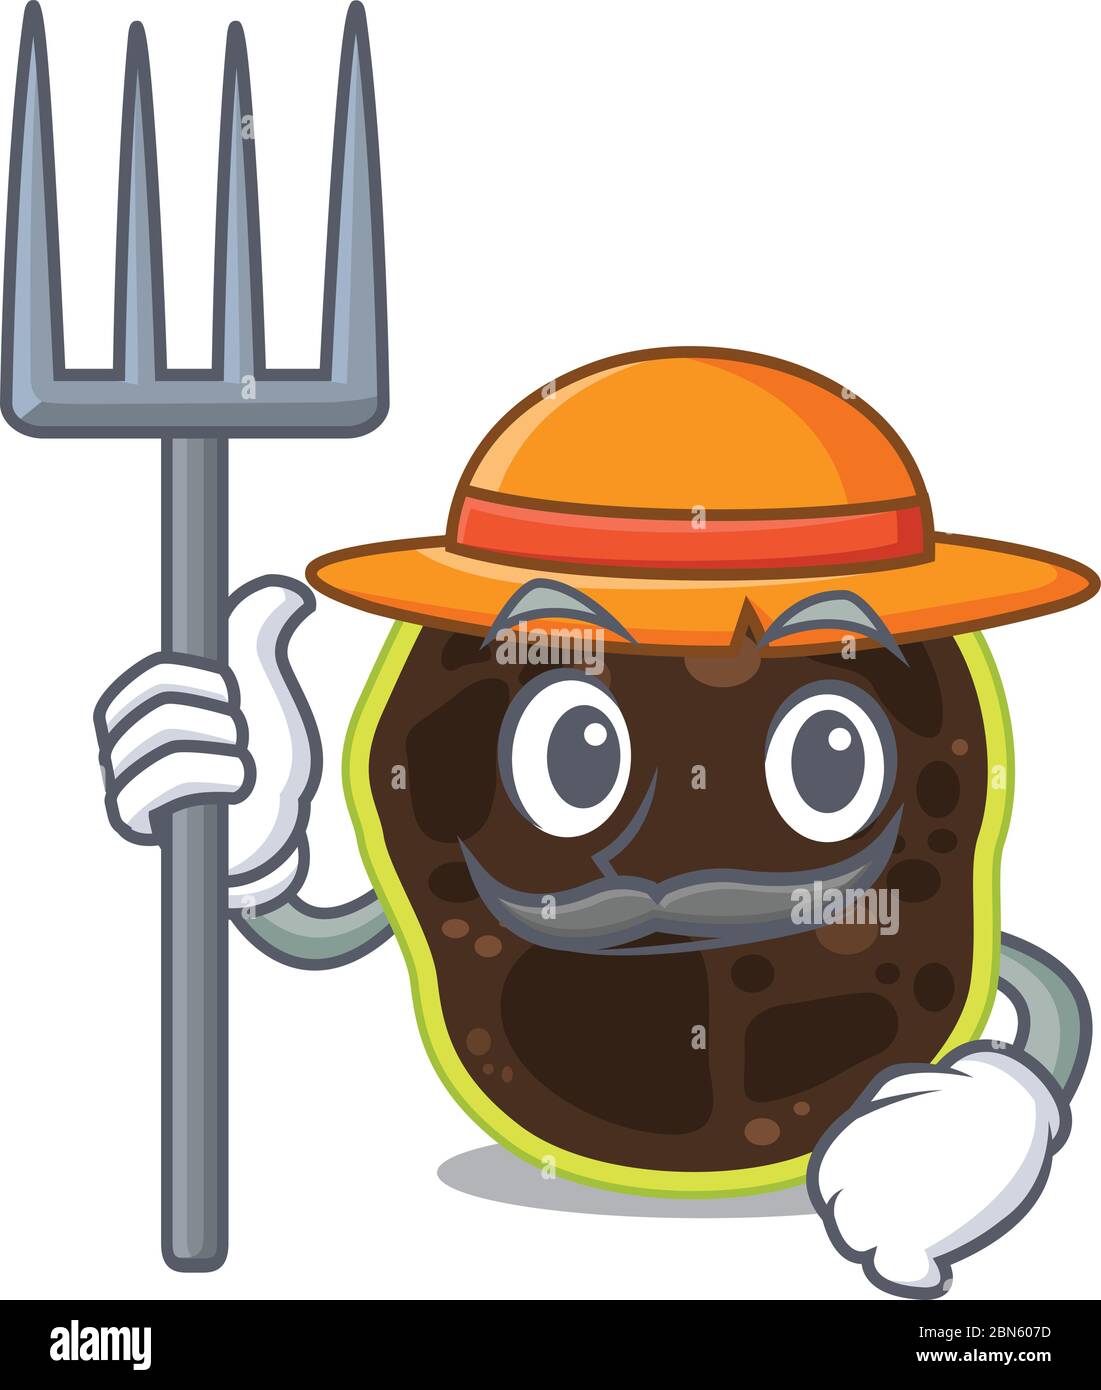 Firmicutes mascot design working as a Farmer wearing a hat Stock Vector